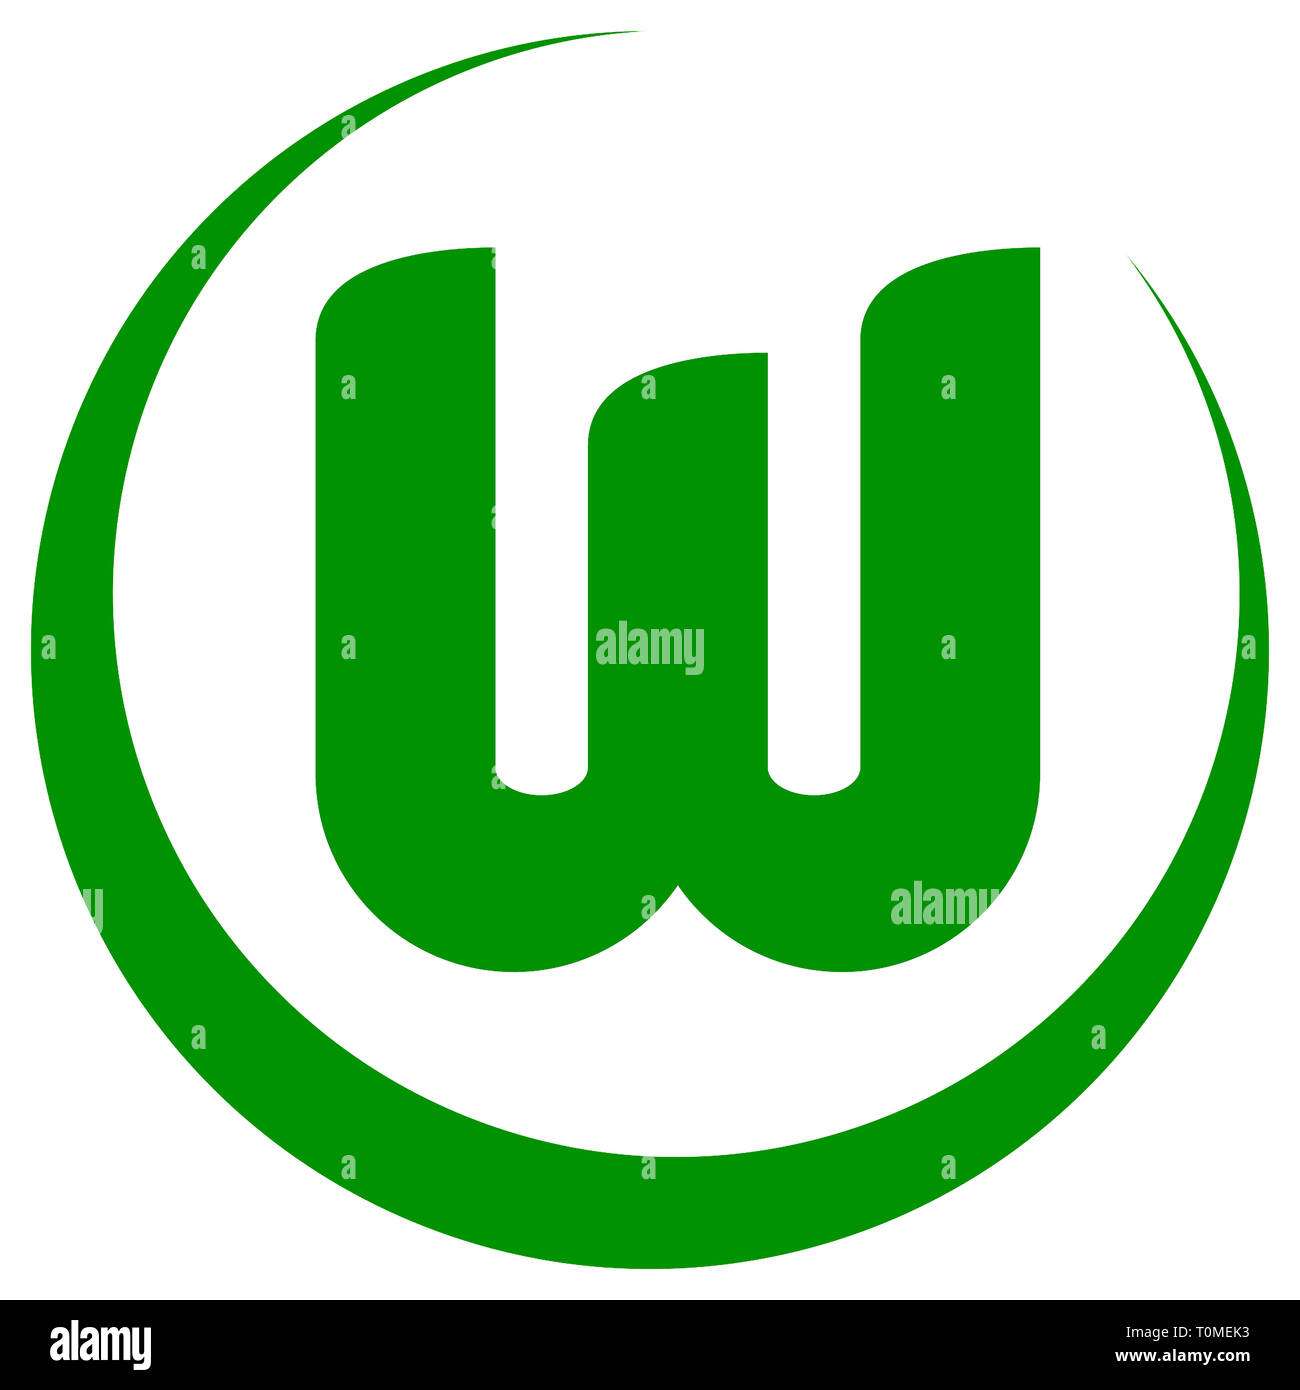 Logo de l'équipe de football allemande VfL Wolfsburg - Allemagne Photo  Stock - Alamy